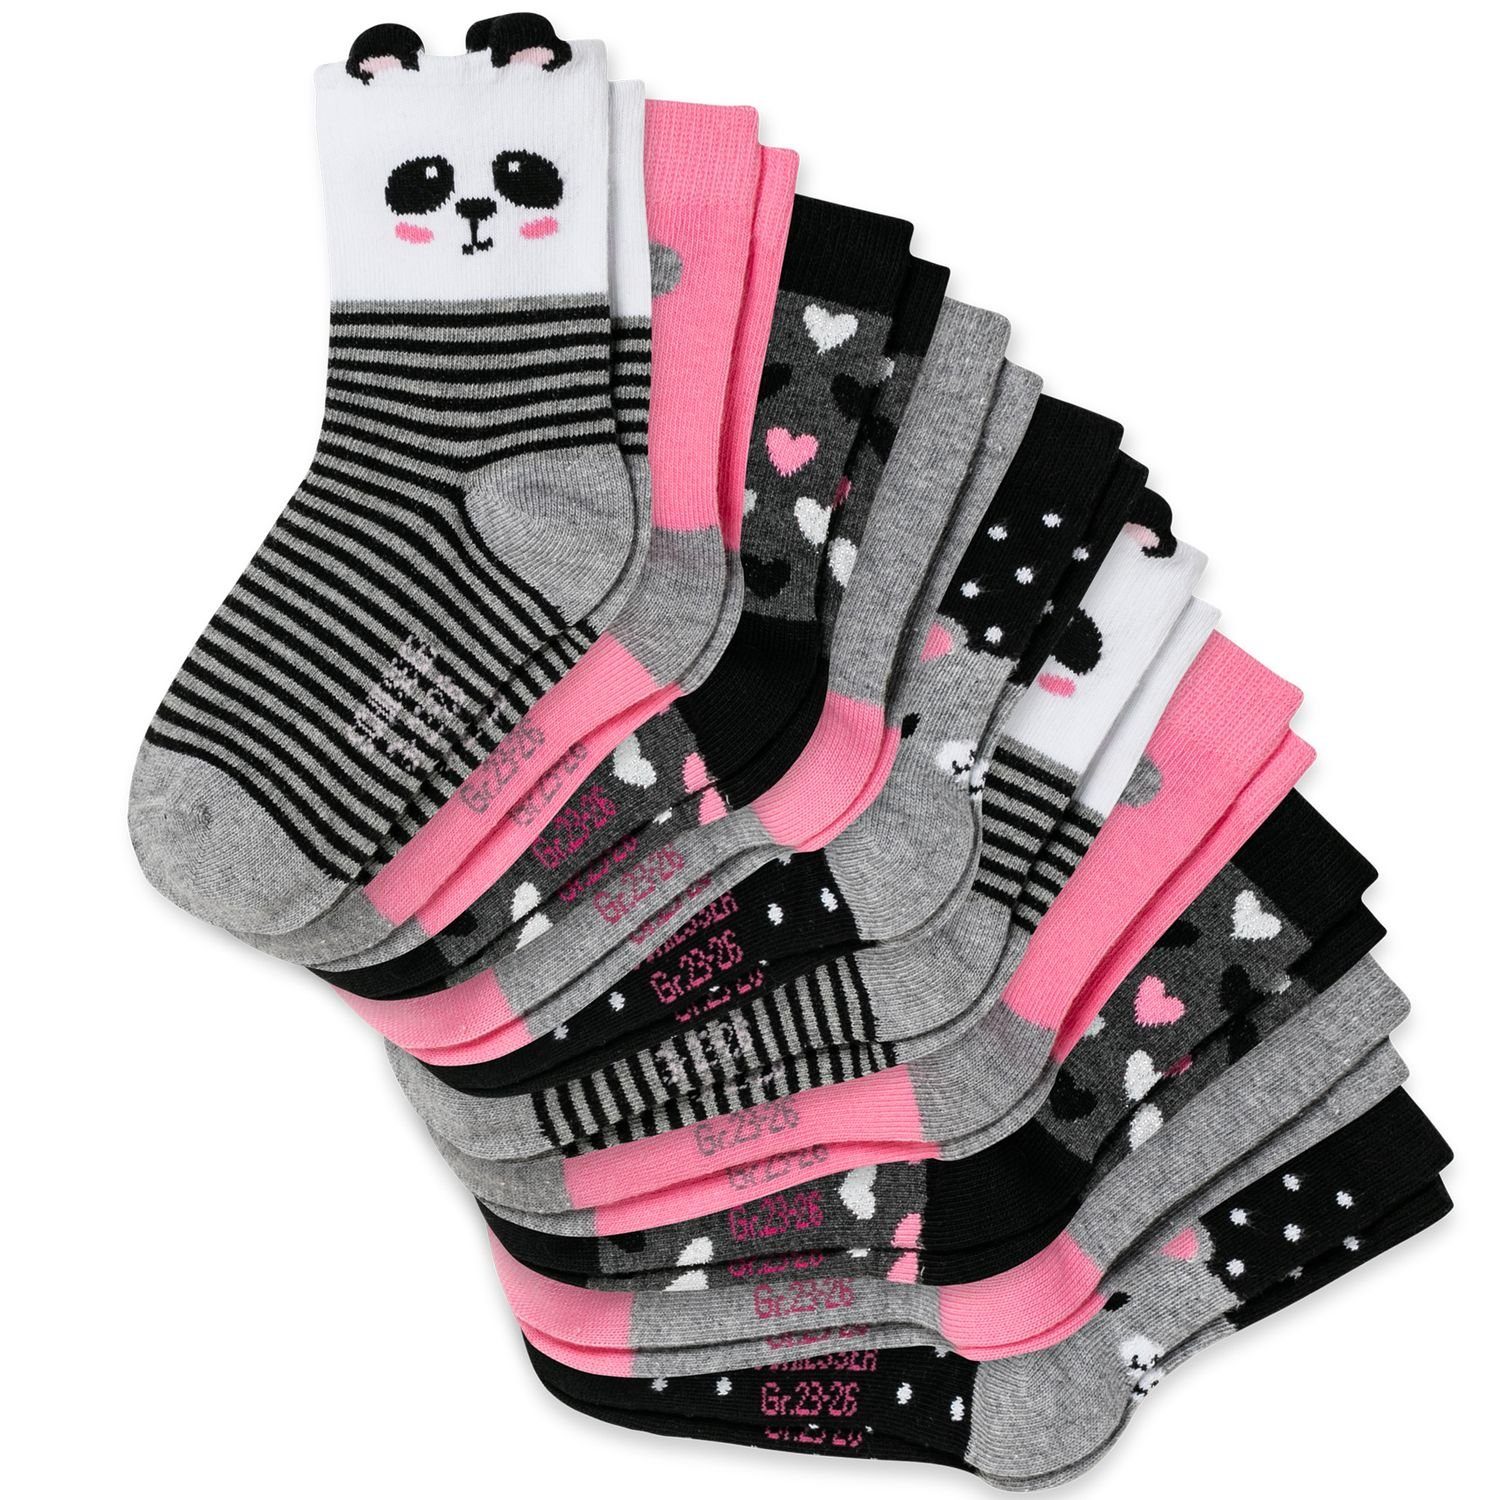 Schiesser Socken (10-Paar) Kinder, Mädchen, Jungen, verstärkte Belastungszonen, 10 Paar mehrfarbig Panda